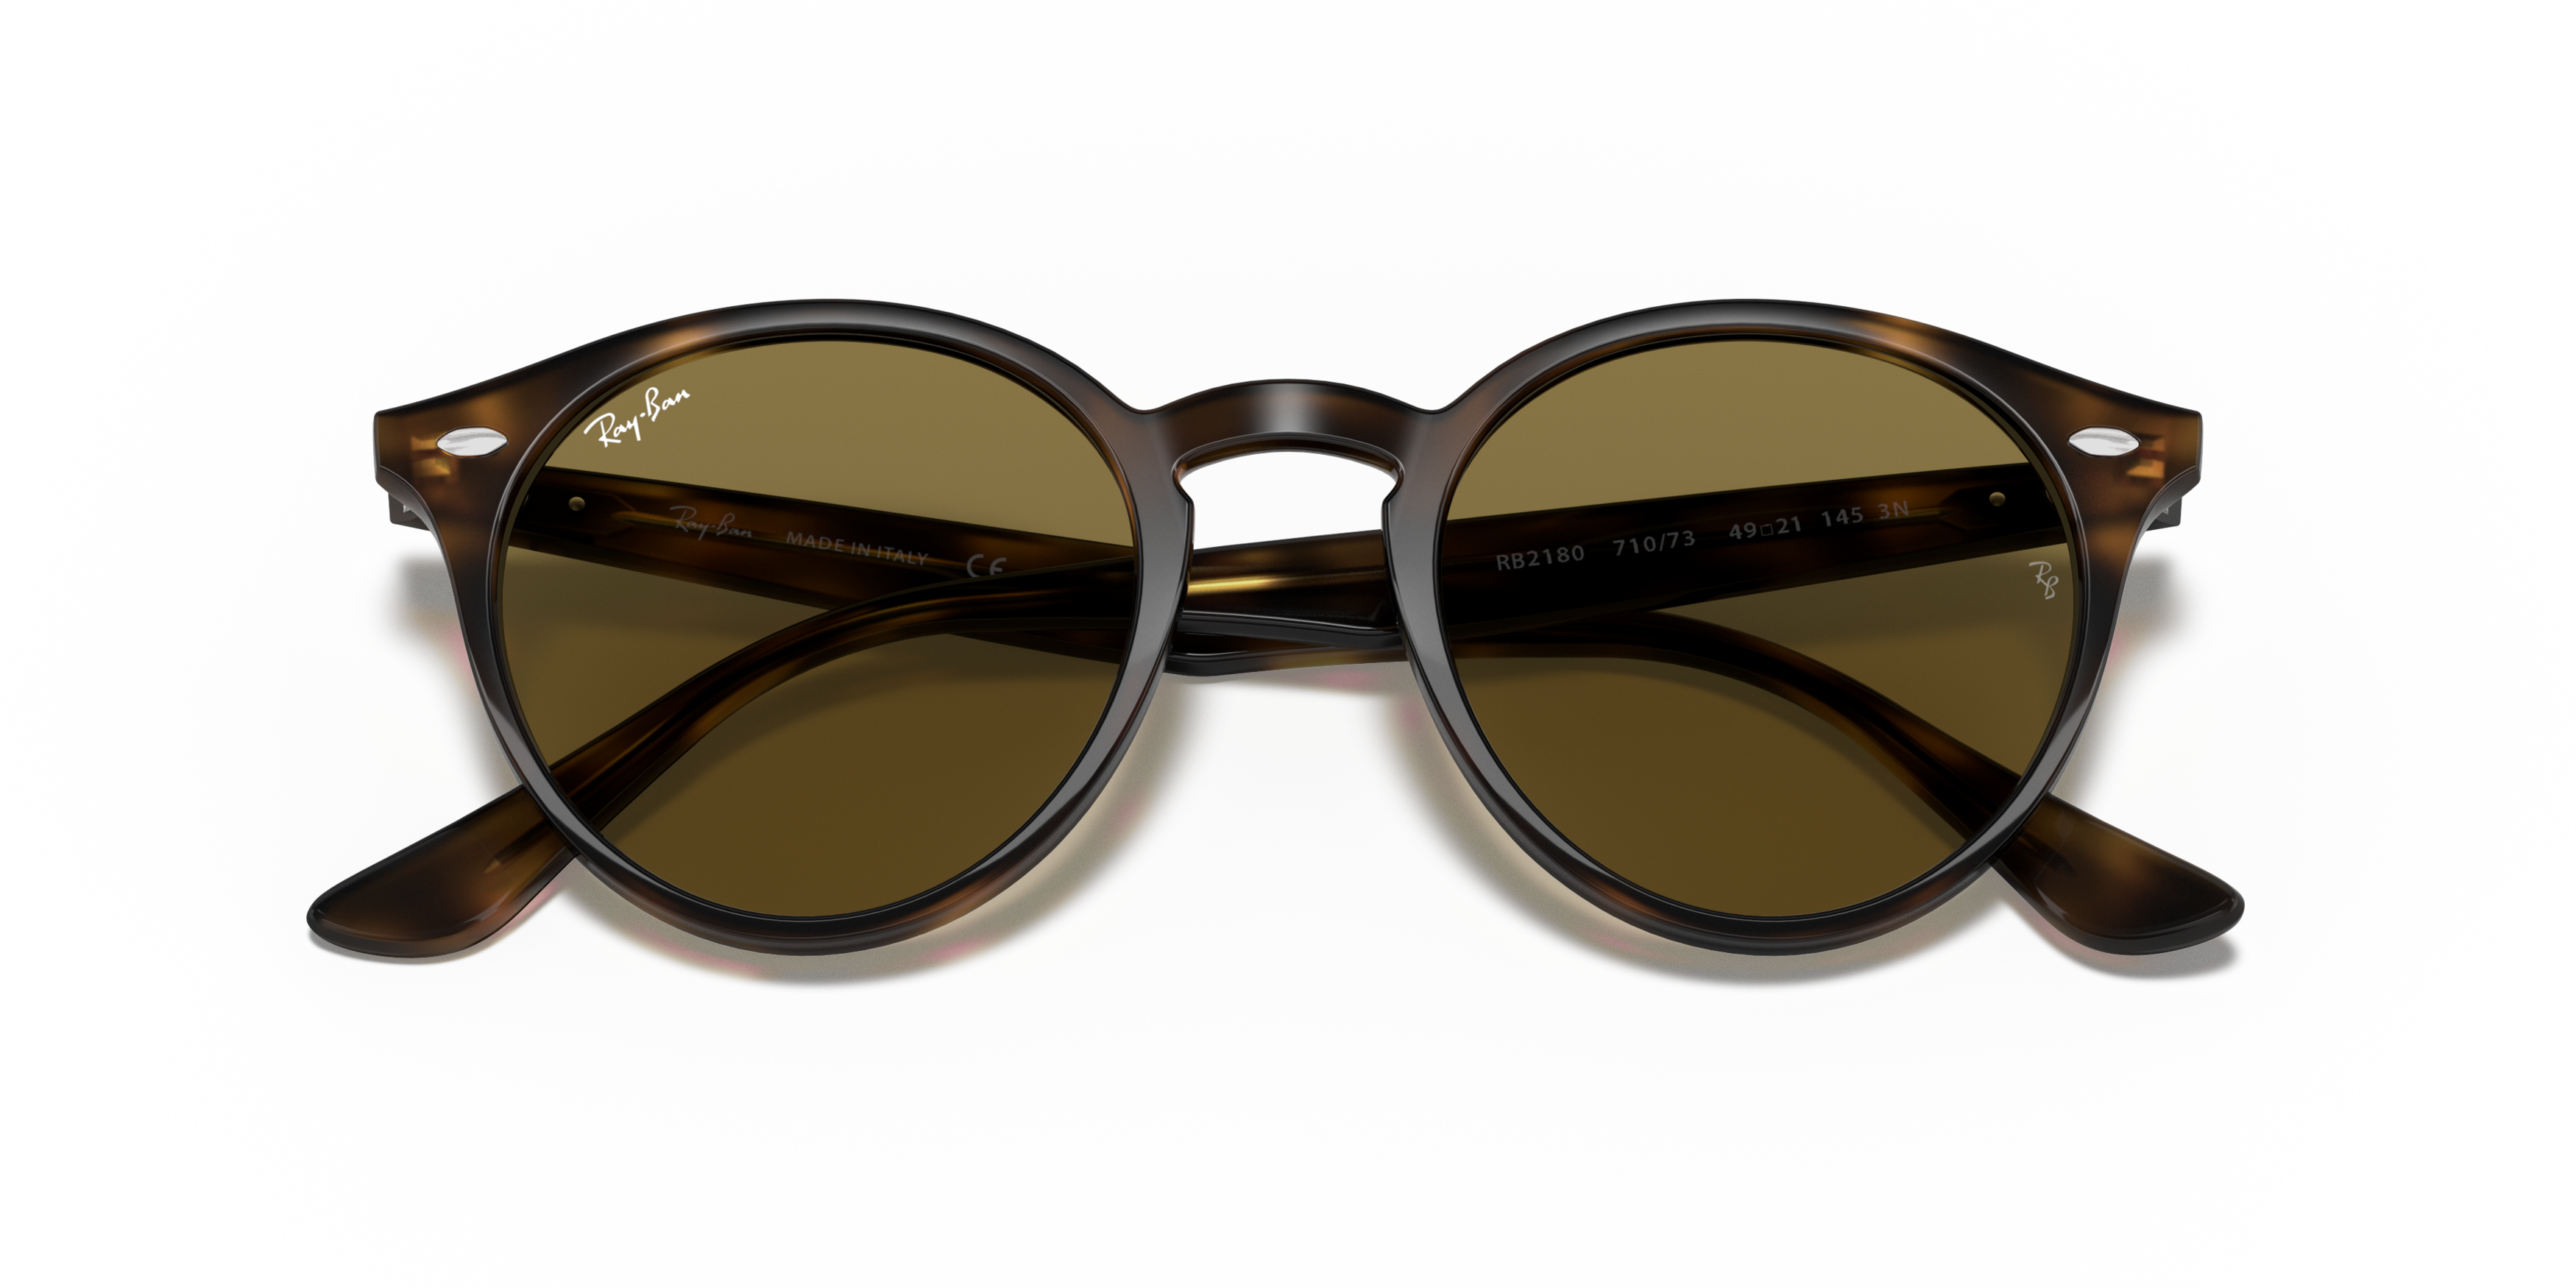 Folded Ray-Ban RB 2180 (710/73) Sunglasses Brown / Tortoise Shell